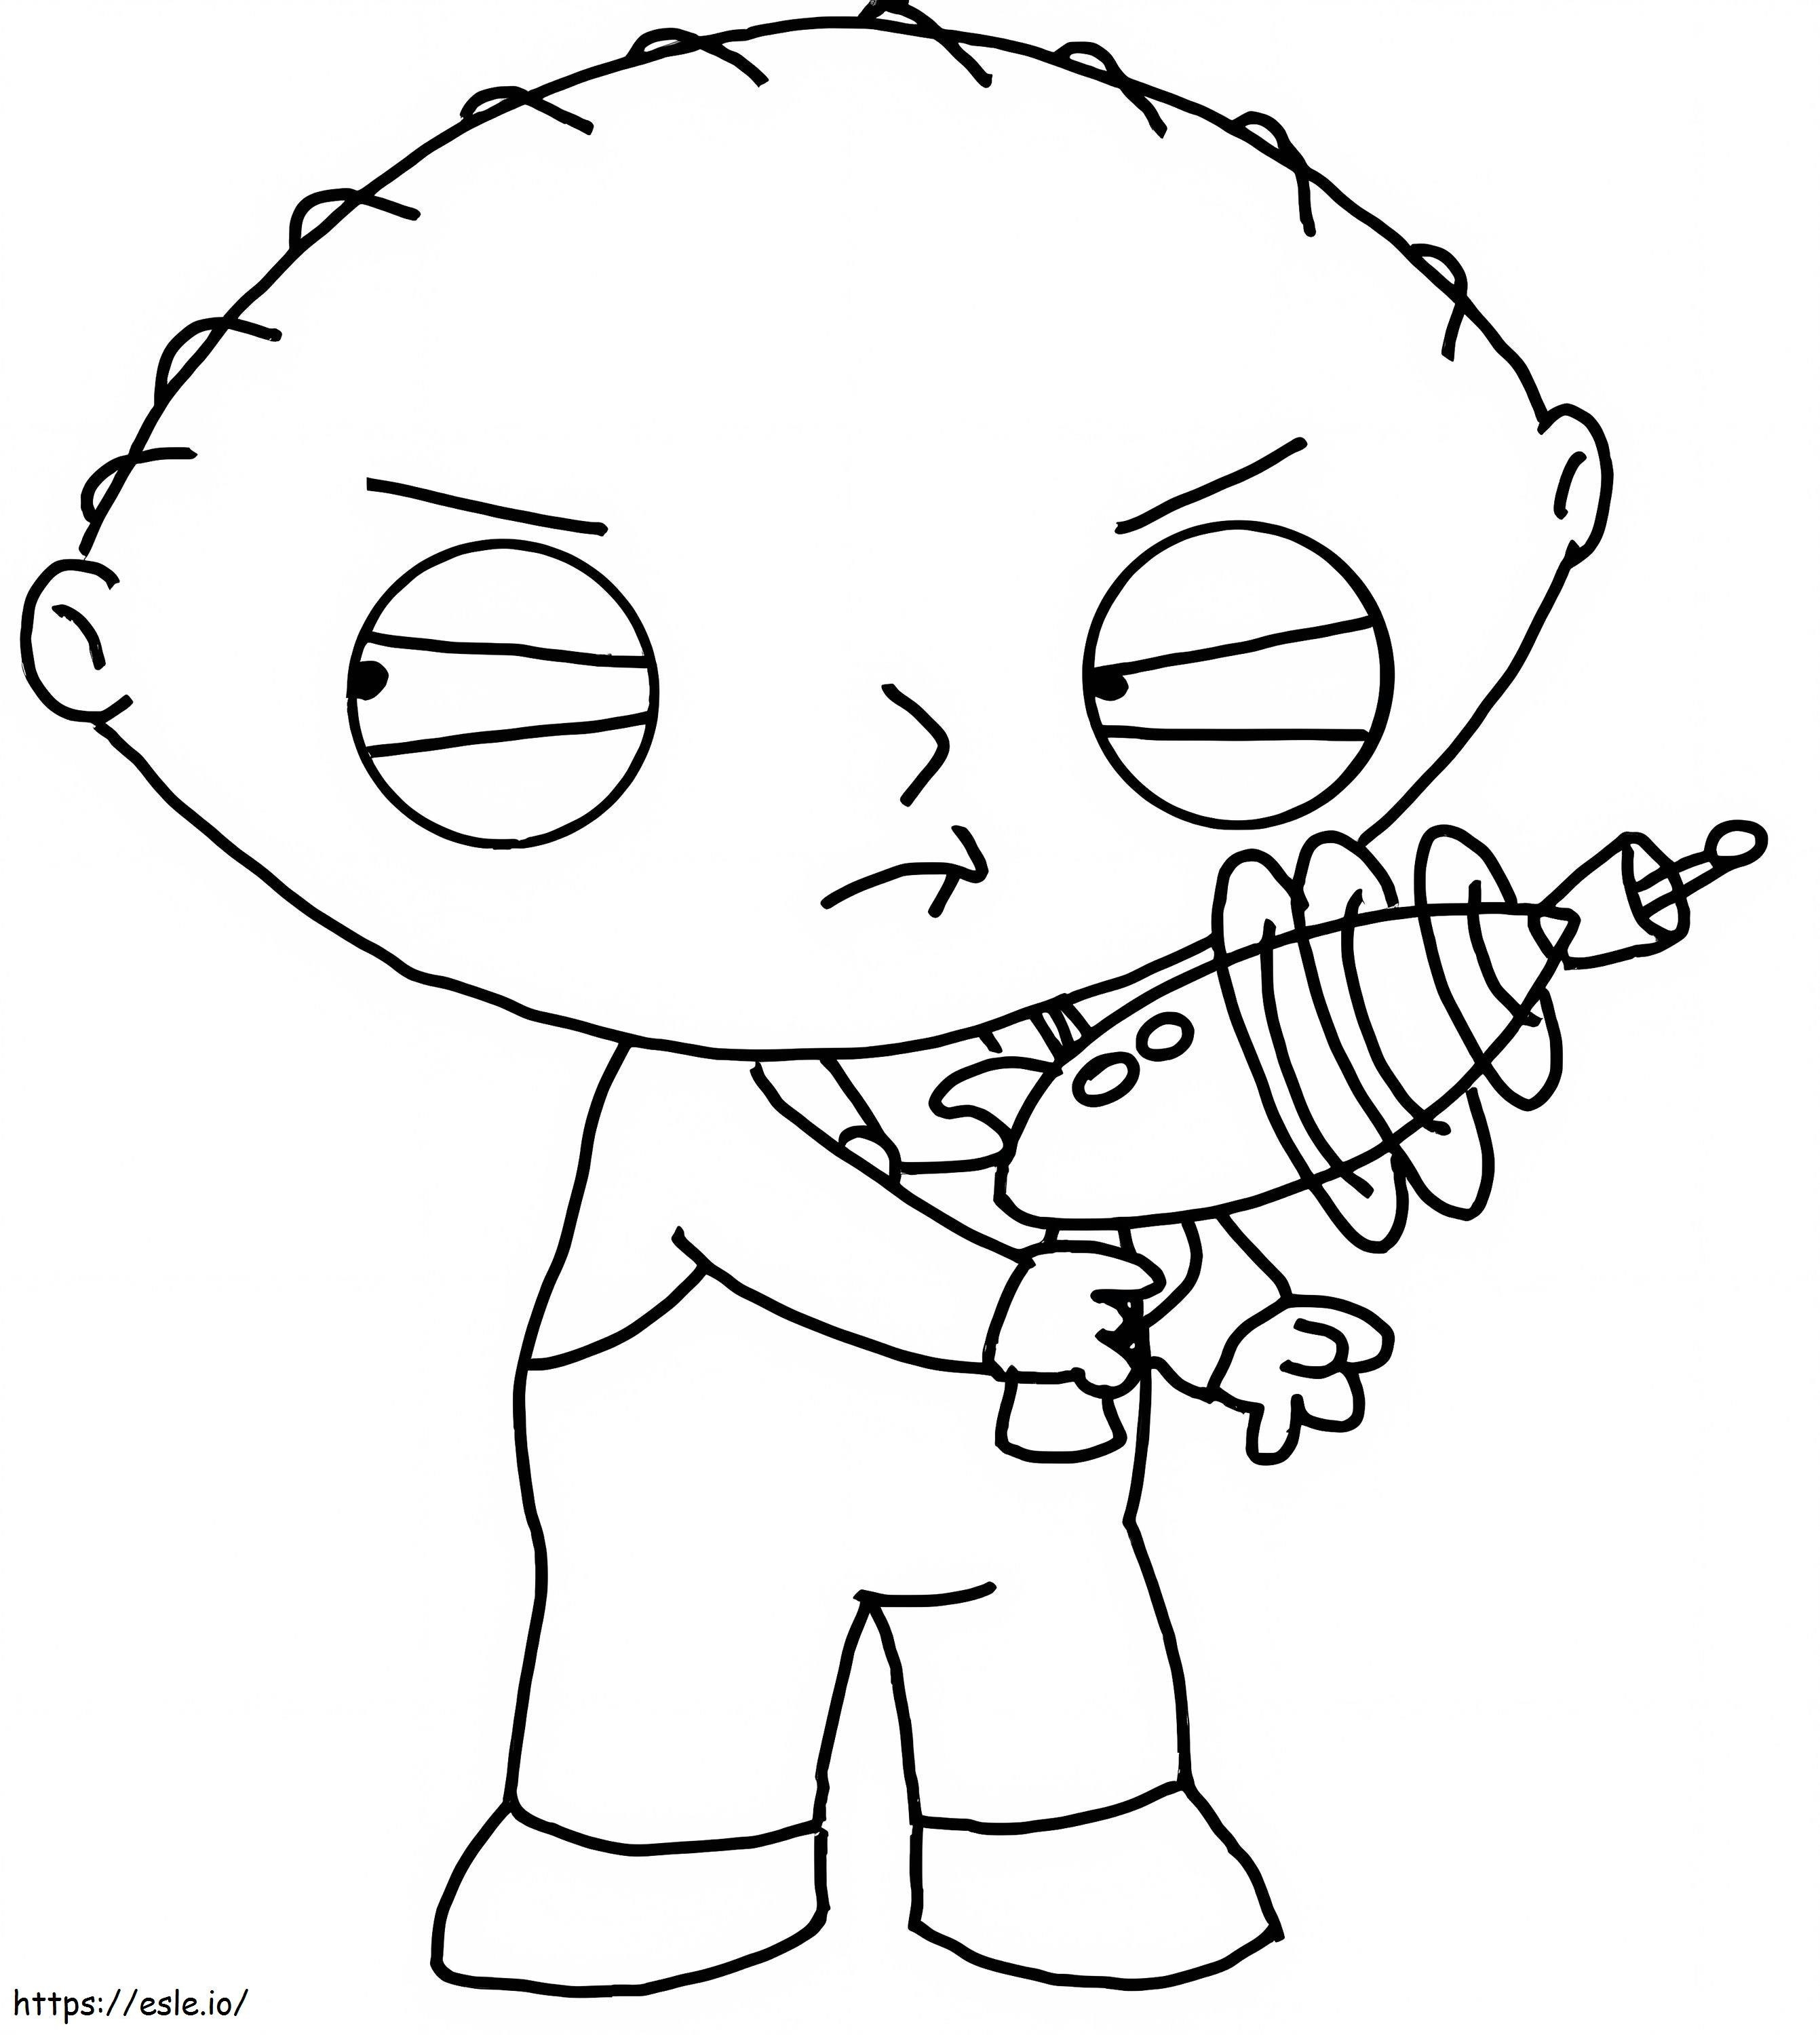 Stewie Griffin Con Arma coloring page